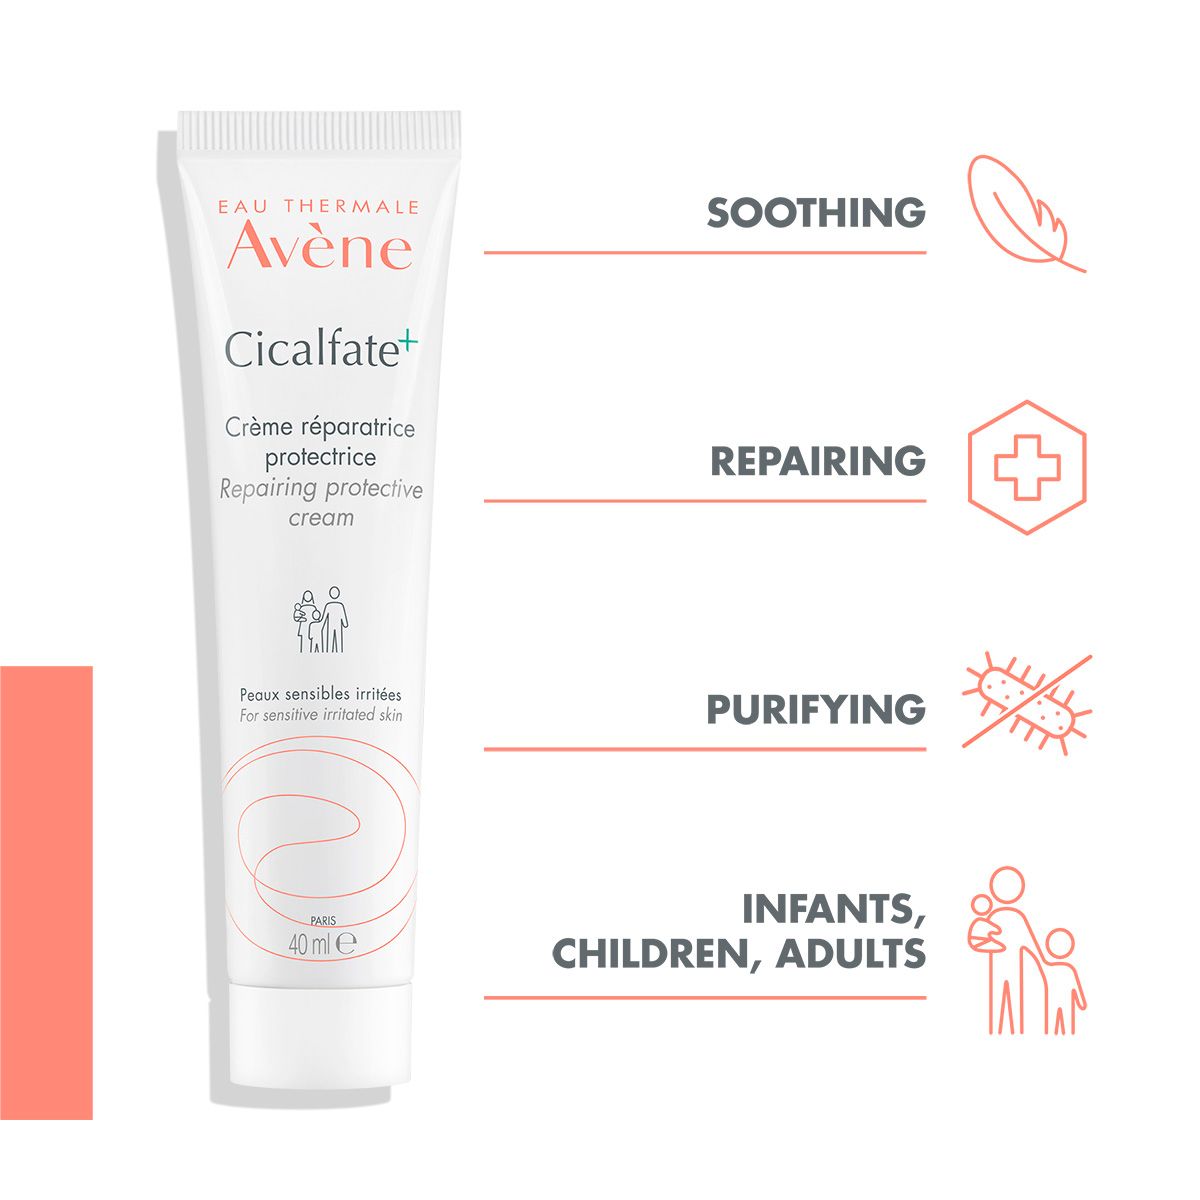 AVENE Cicalfate+ Repiaring Protective Cream - 40ml